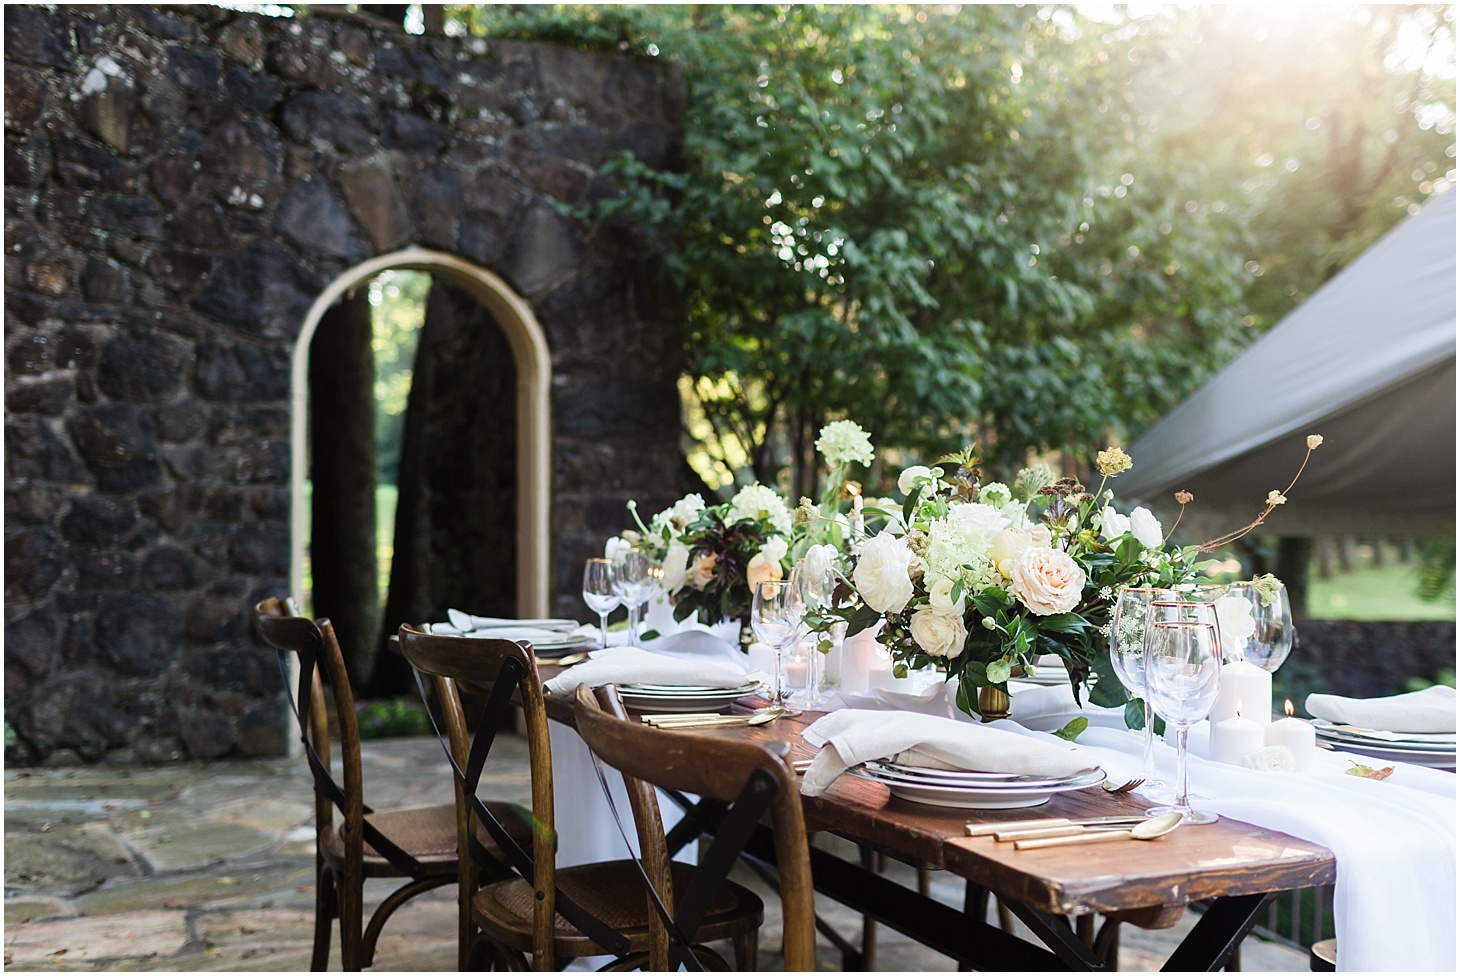 Wedding Reception Table with Wild Green Yonder Wedding Flowers | Equestrian-Inspired Fall Wedding Editorial at Poplar Springs Manor | Sarah Bradshaw Photography